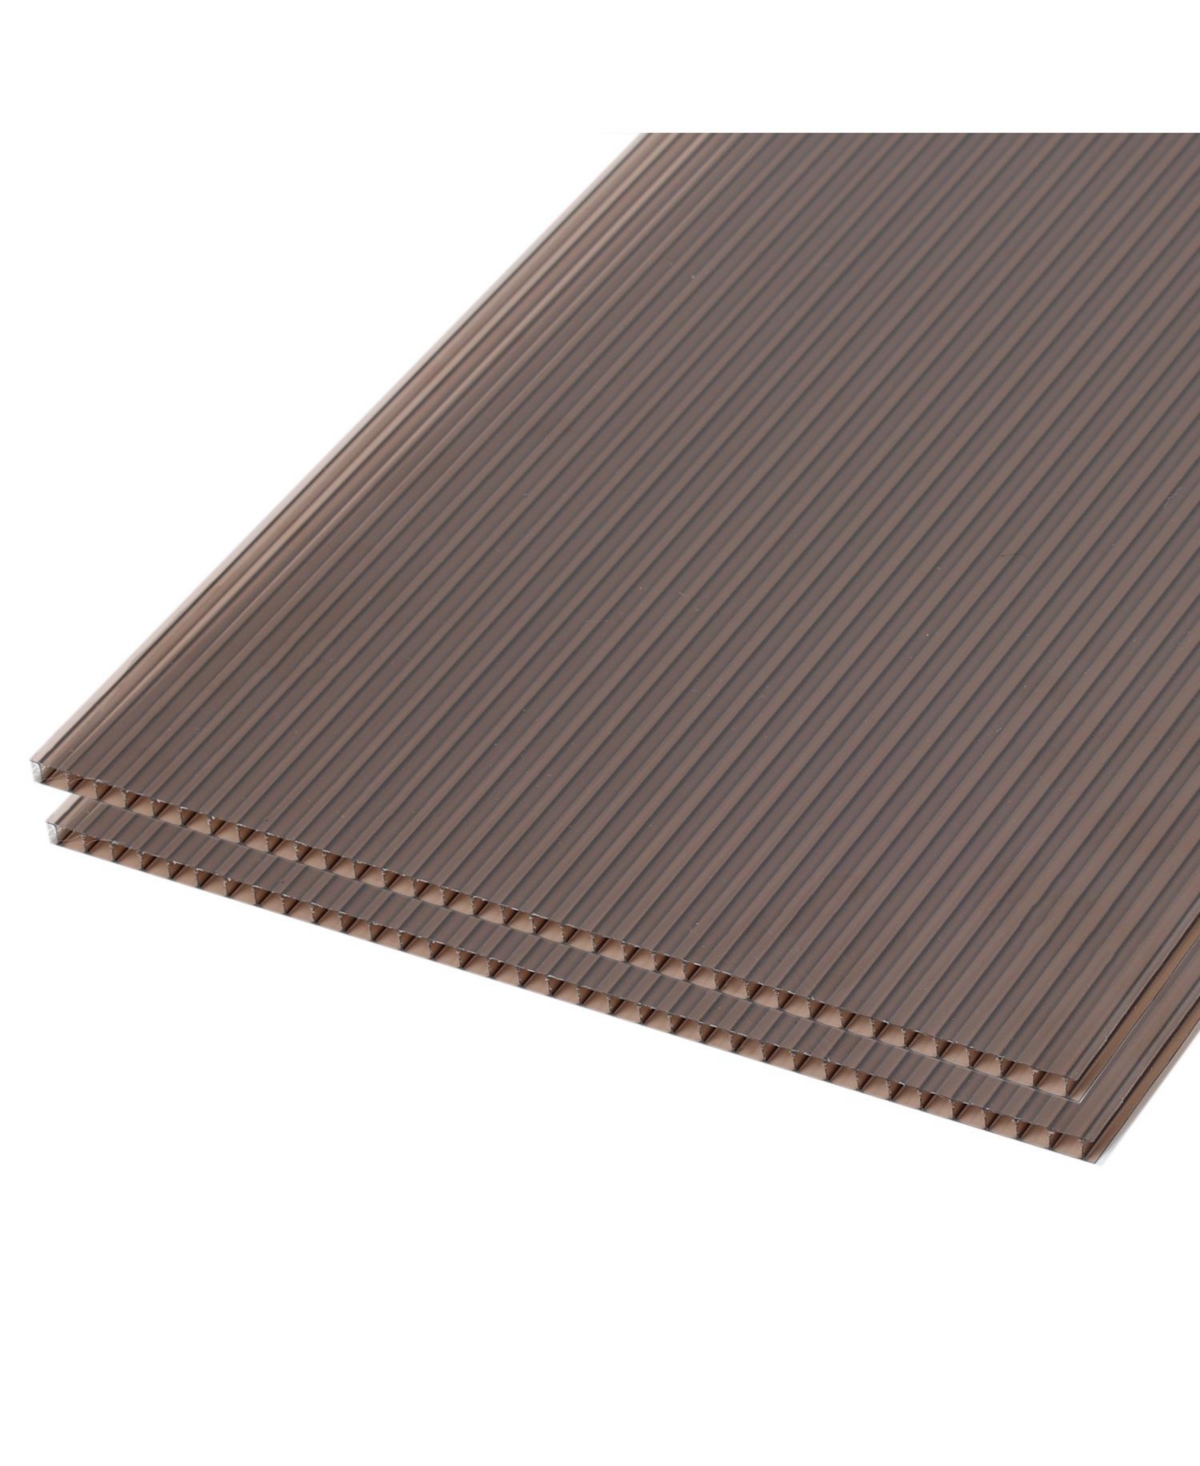 Polycarbonate Gazebo Proof Panels Polycarbonate Sheet 6 Pieces - Brown